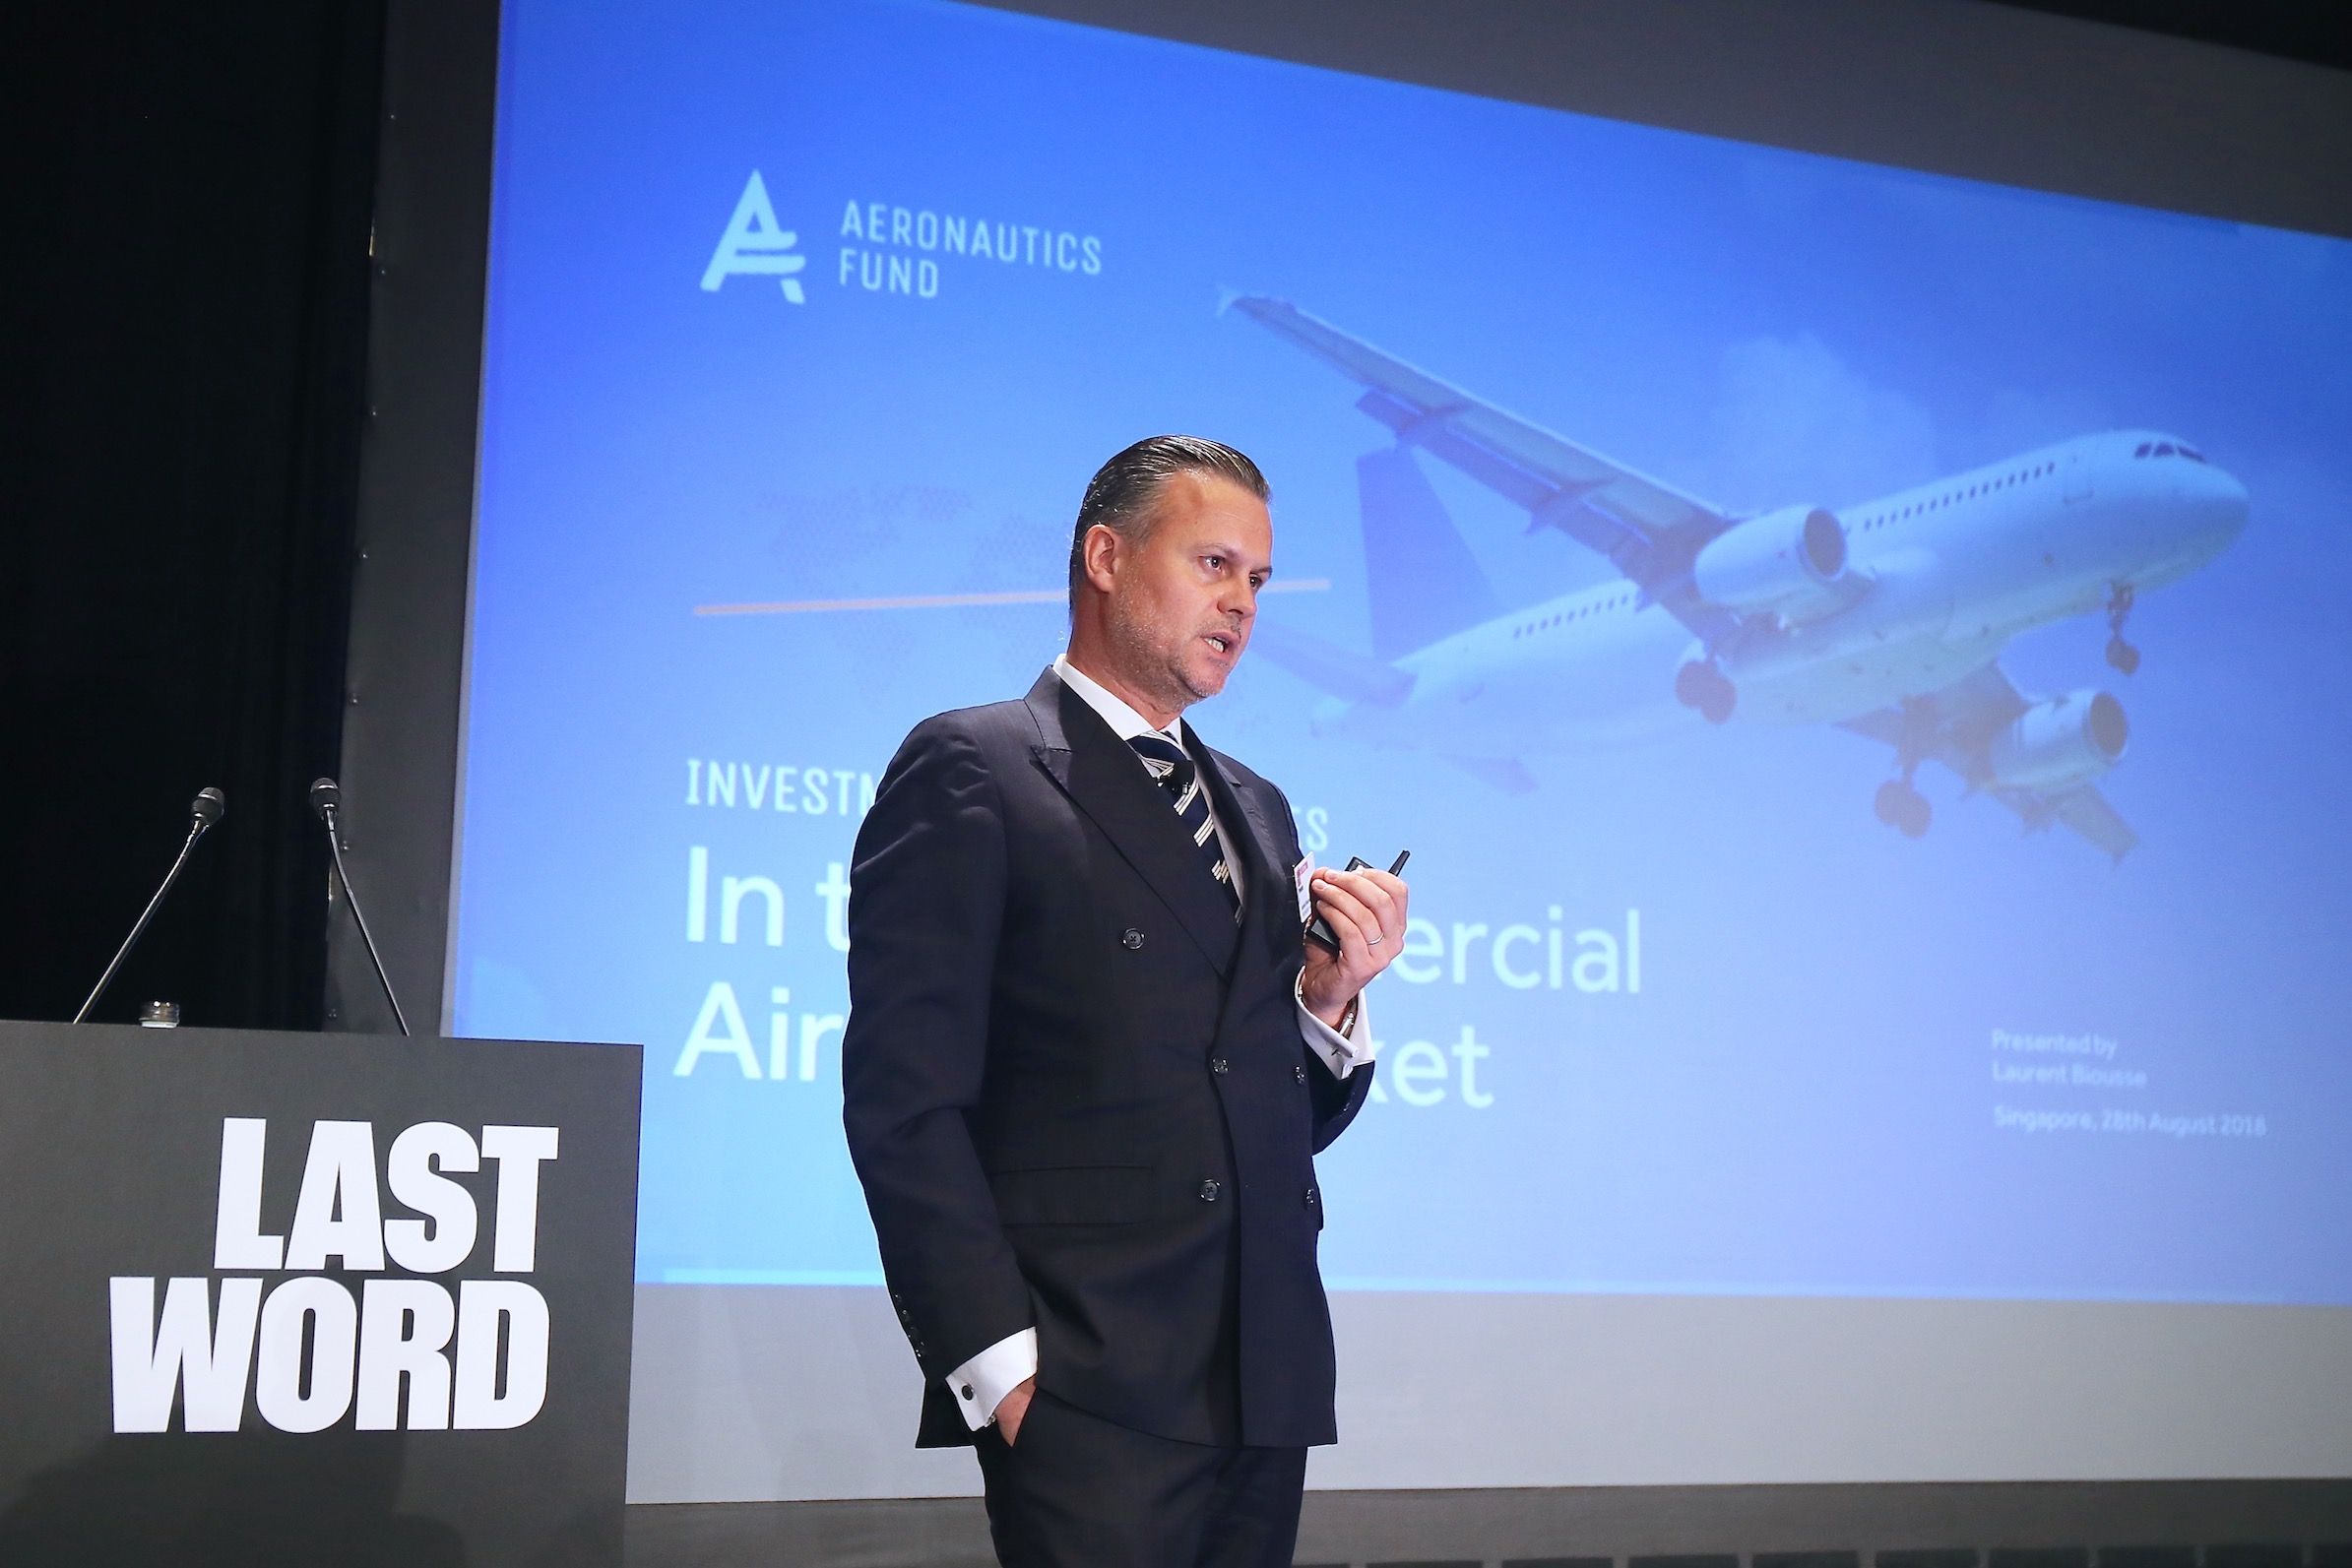 Presentation by Laurent Biousse, CEO,
Aeronautics Fund